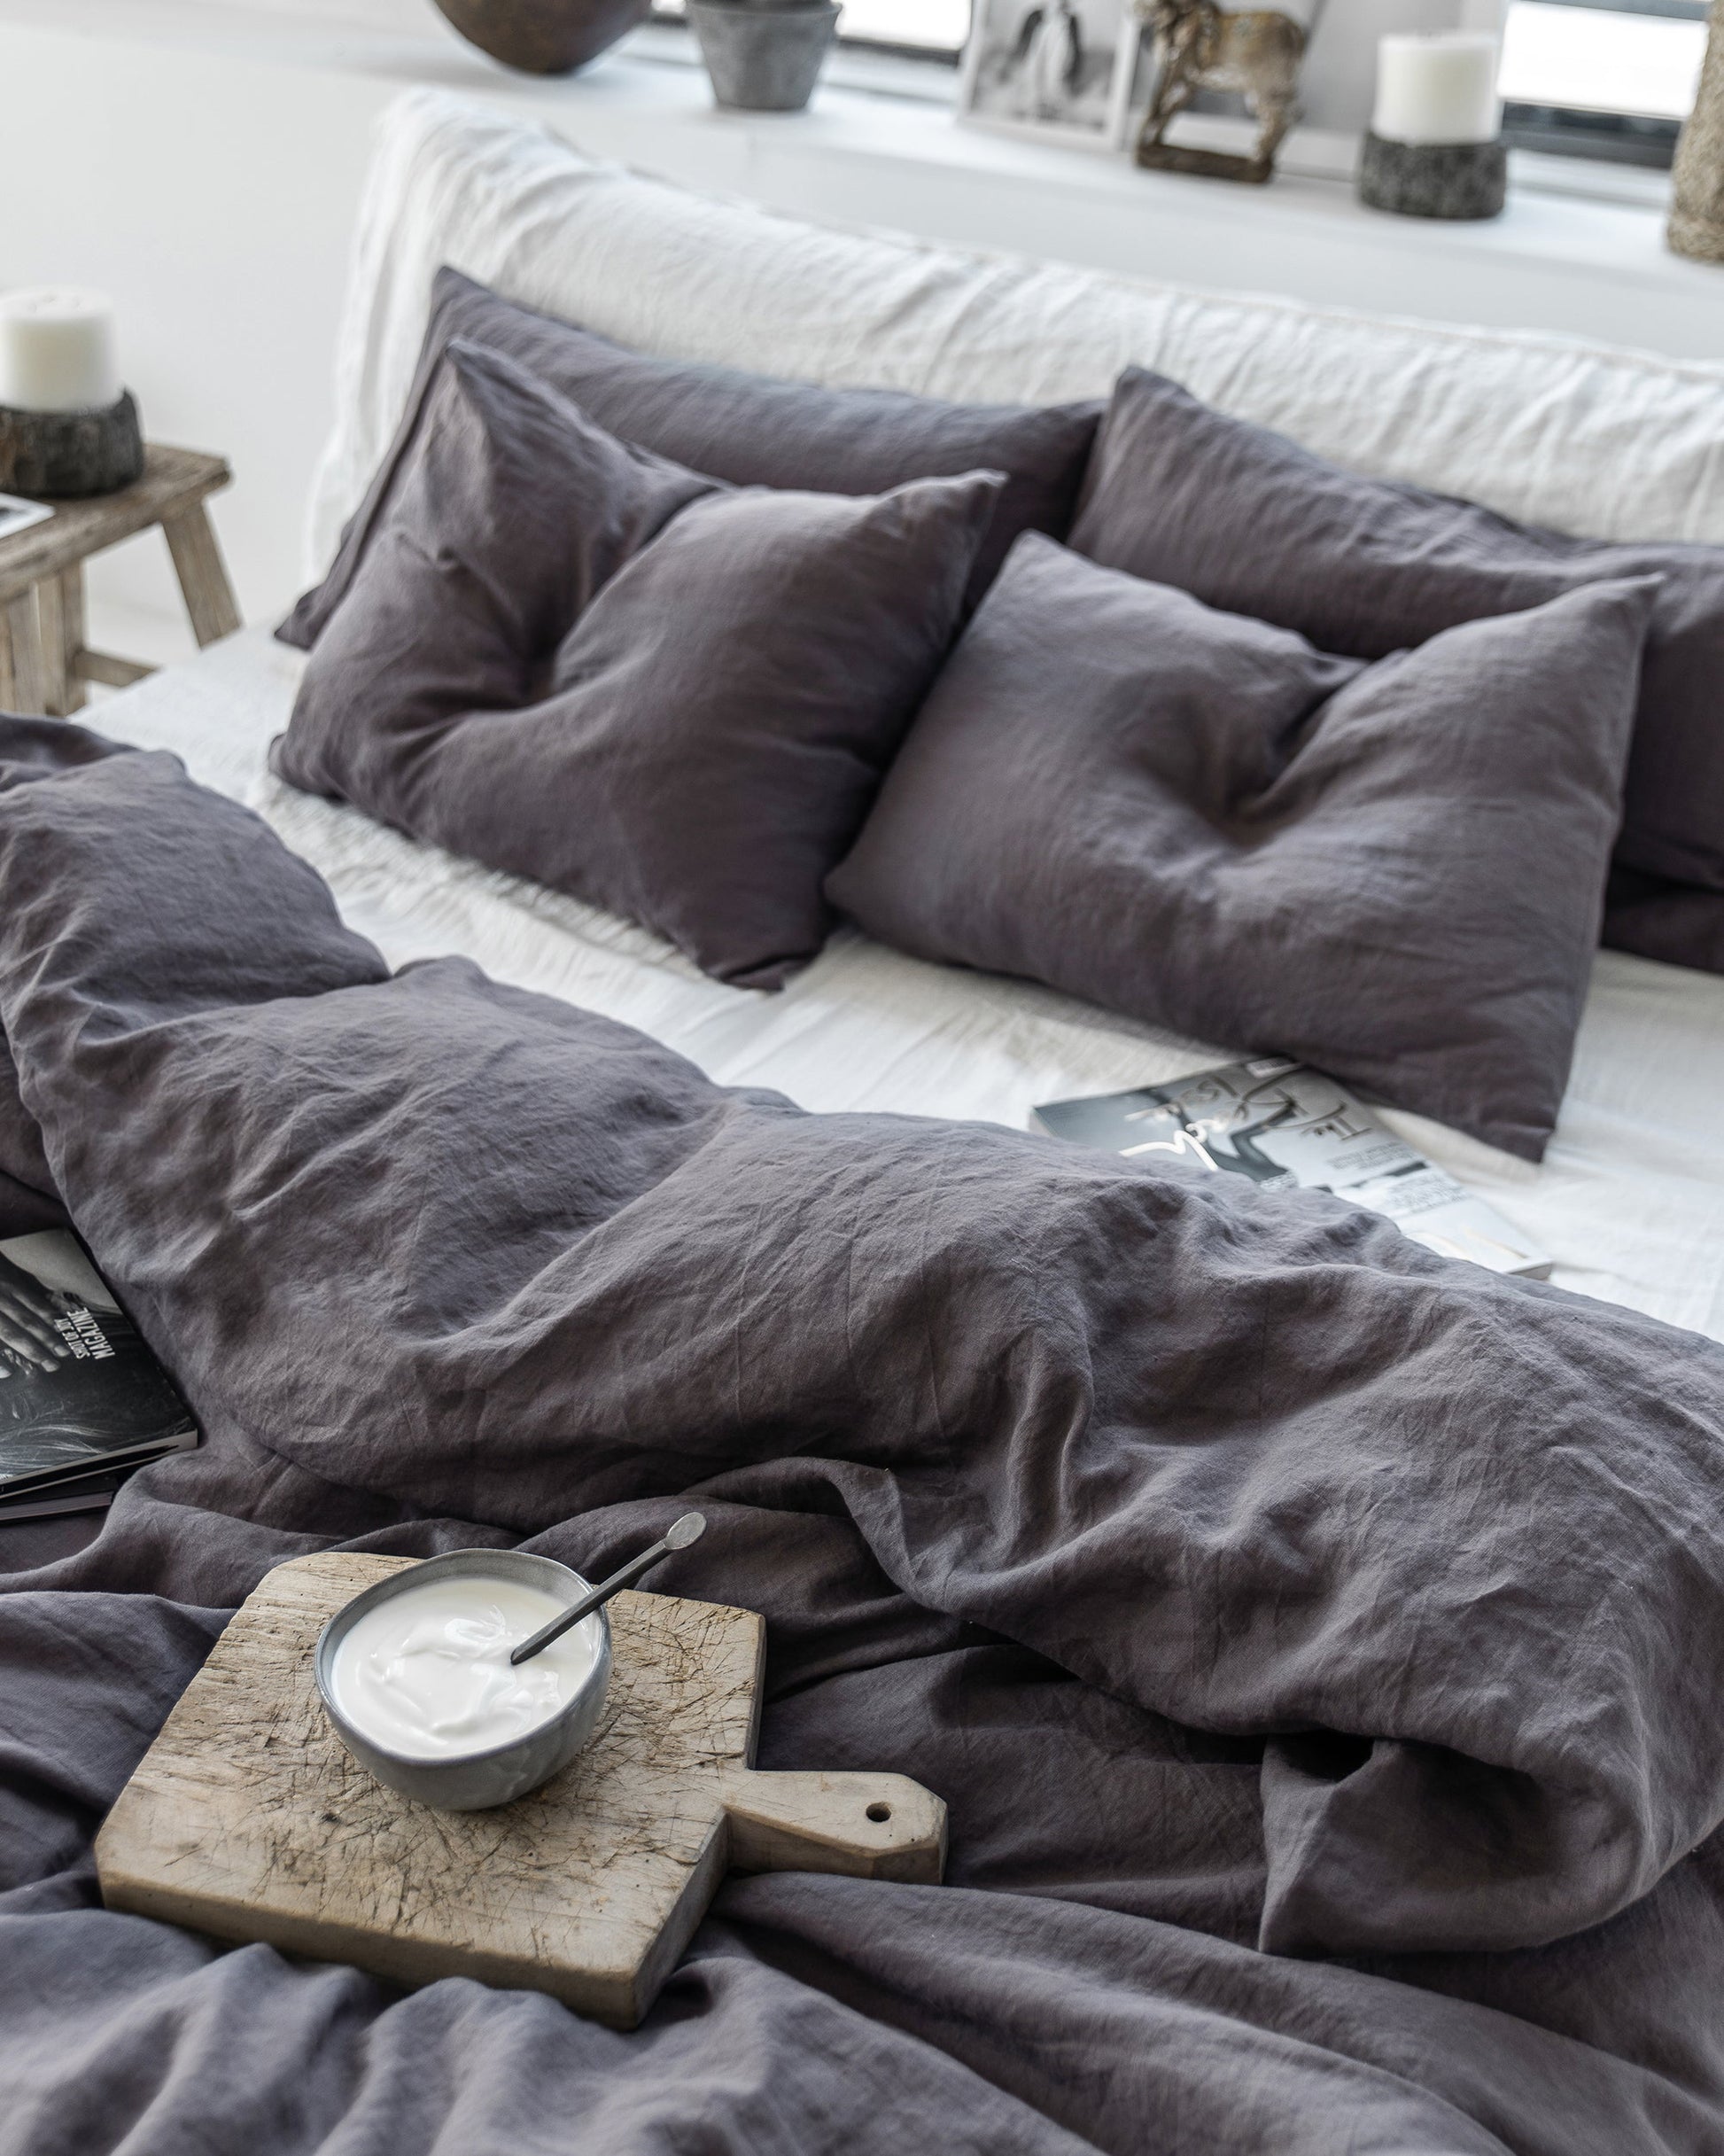 Custom size Charcoal gray linen pillowcase - MagicLinen